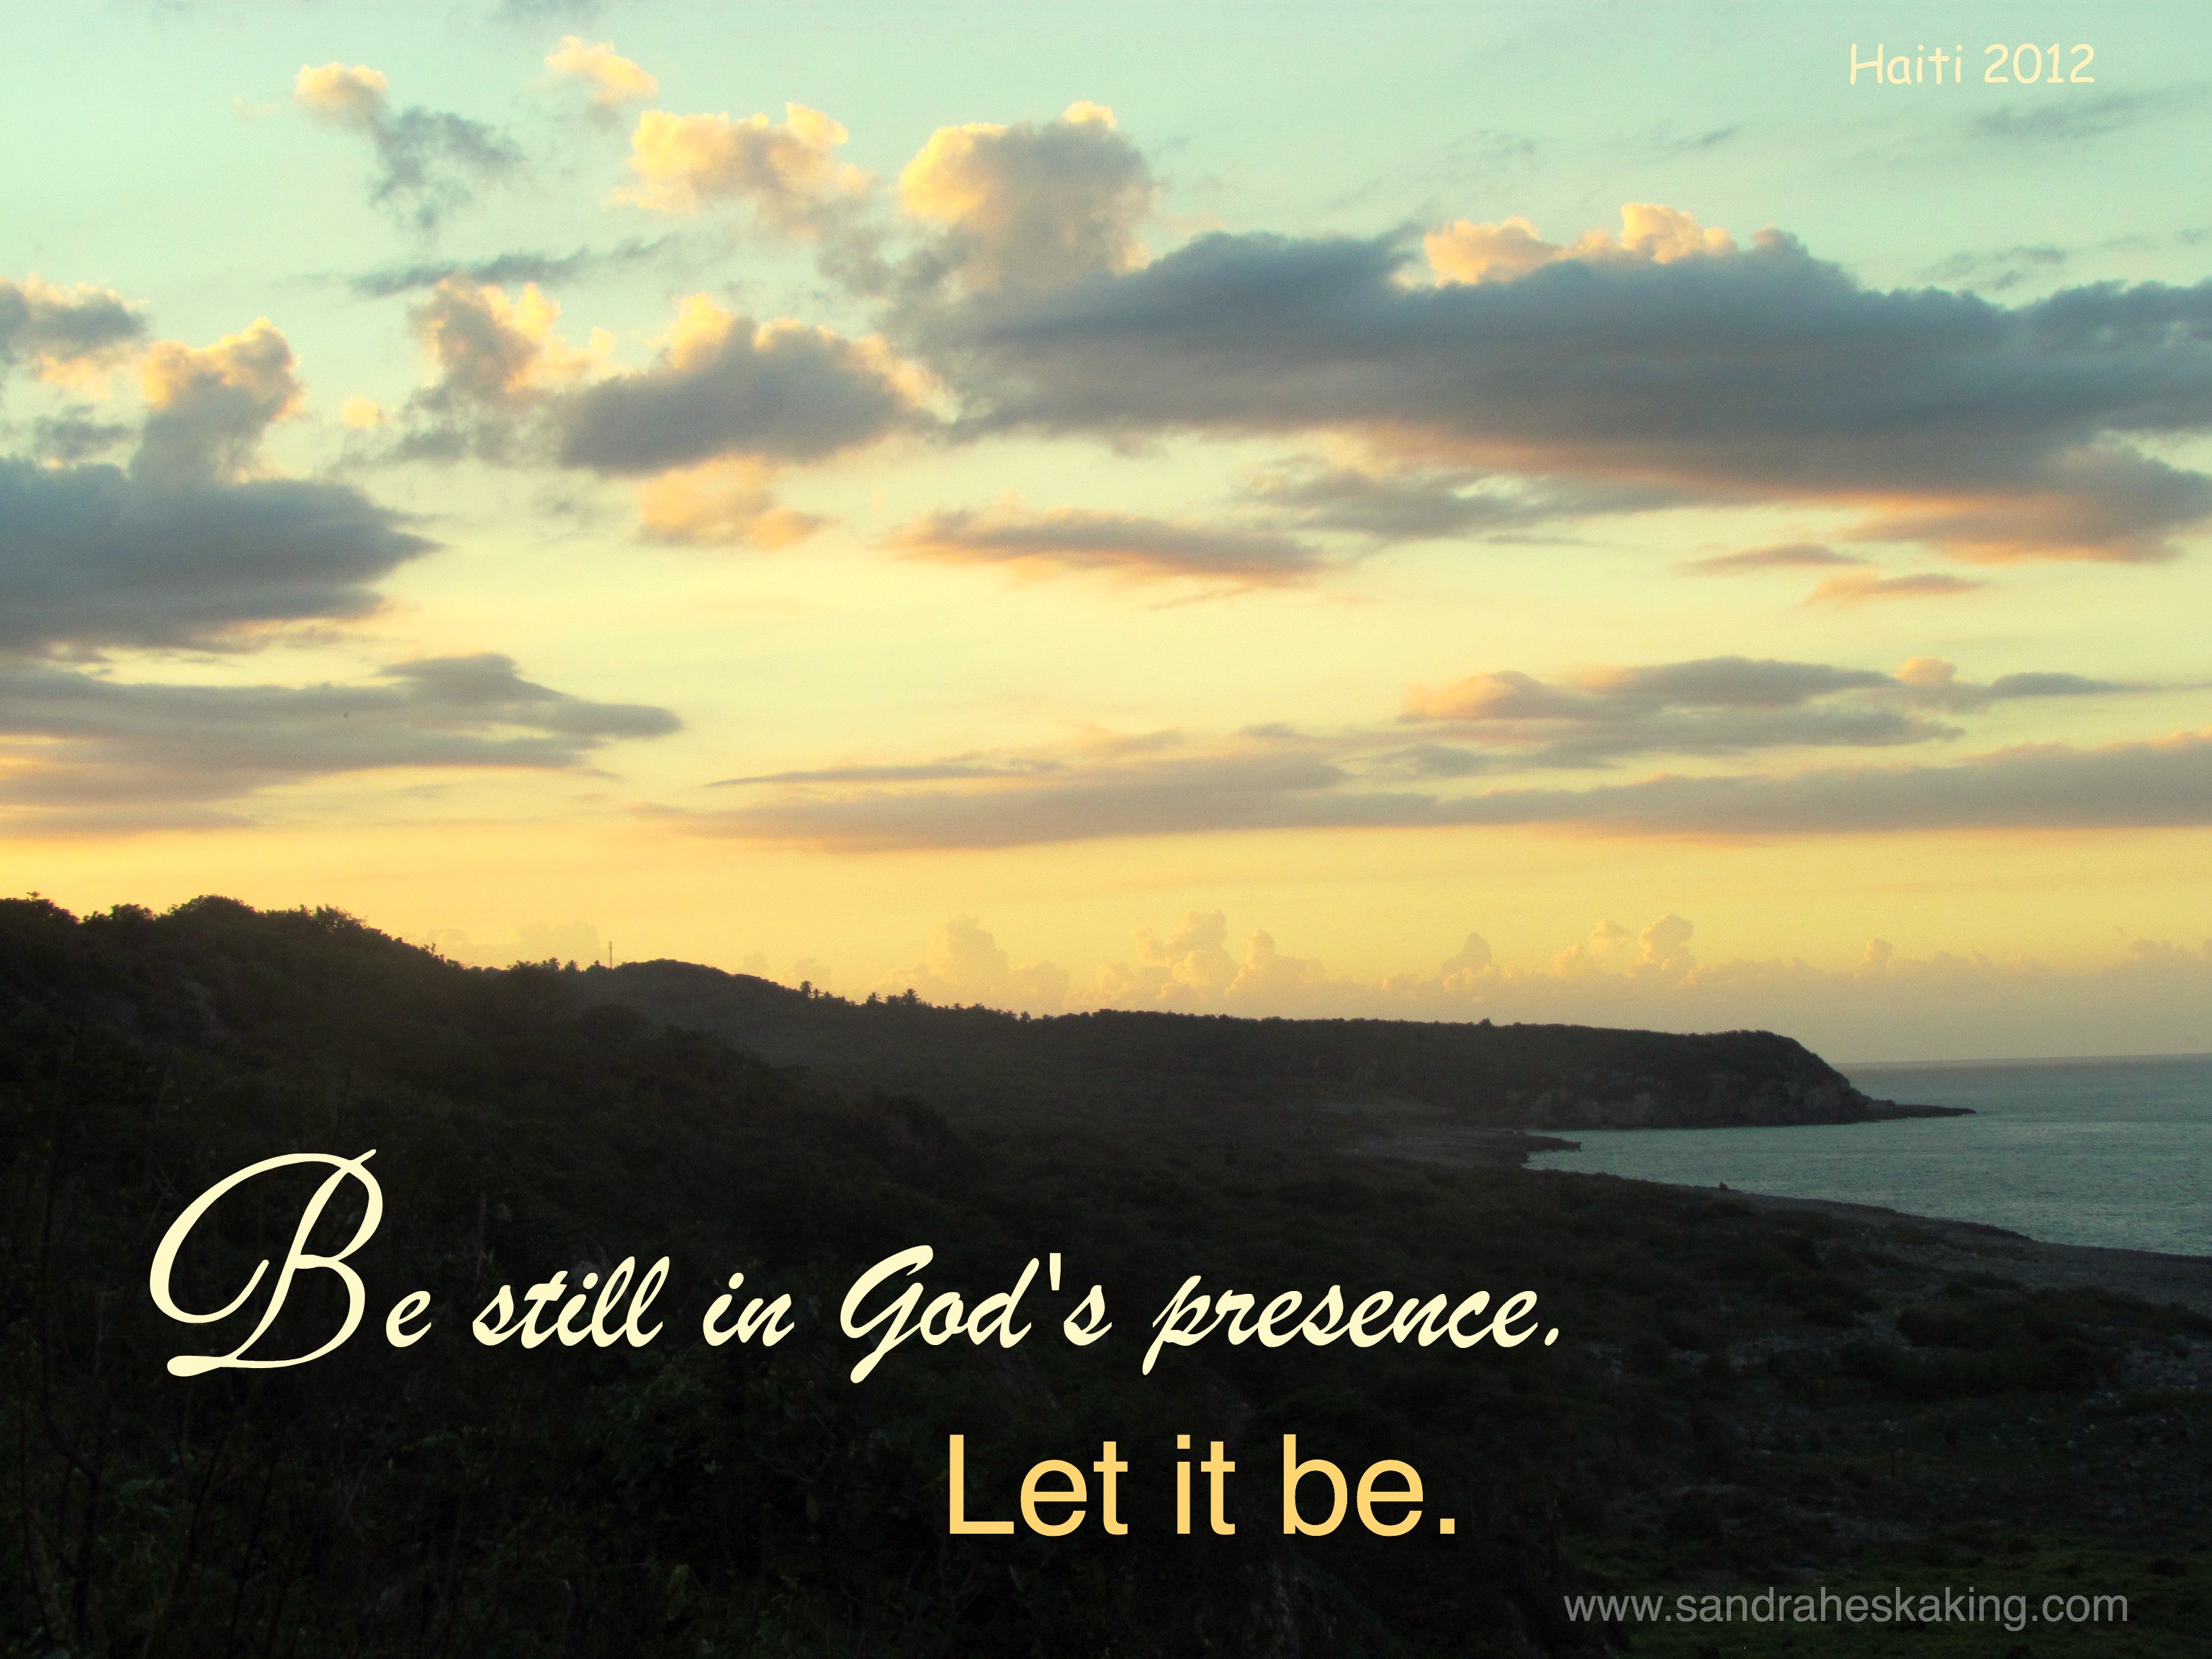 haiti, sunset, sea, prayer, be still, let it be